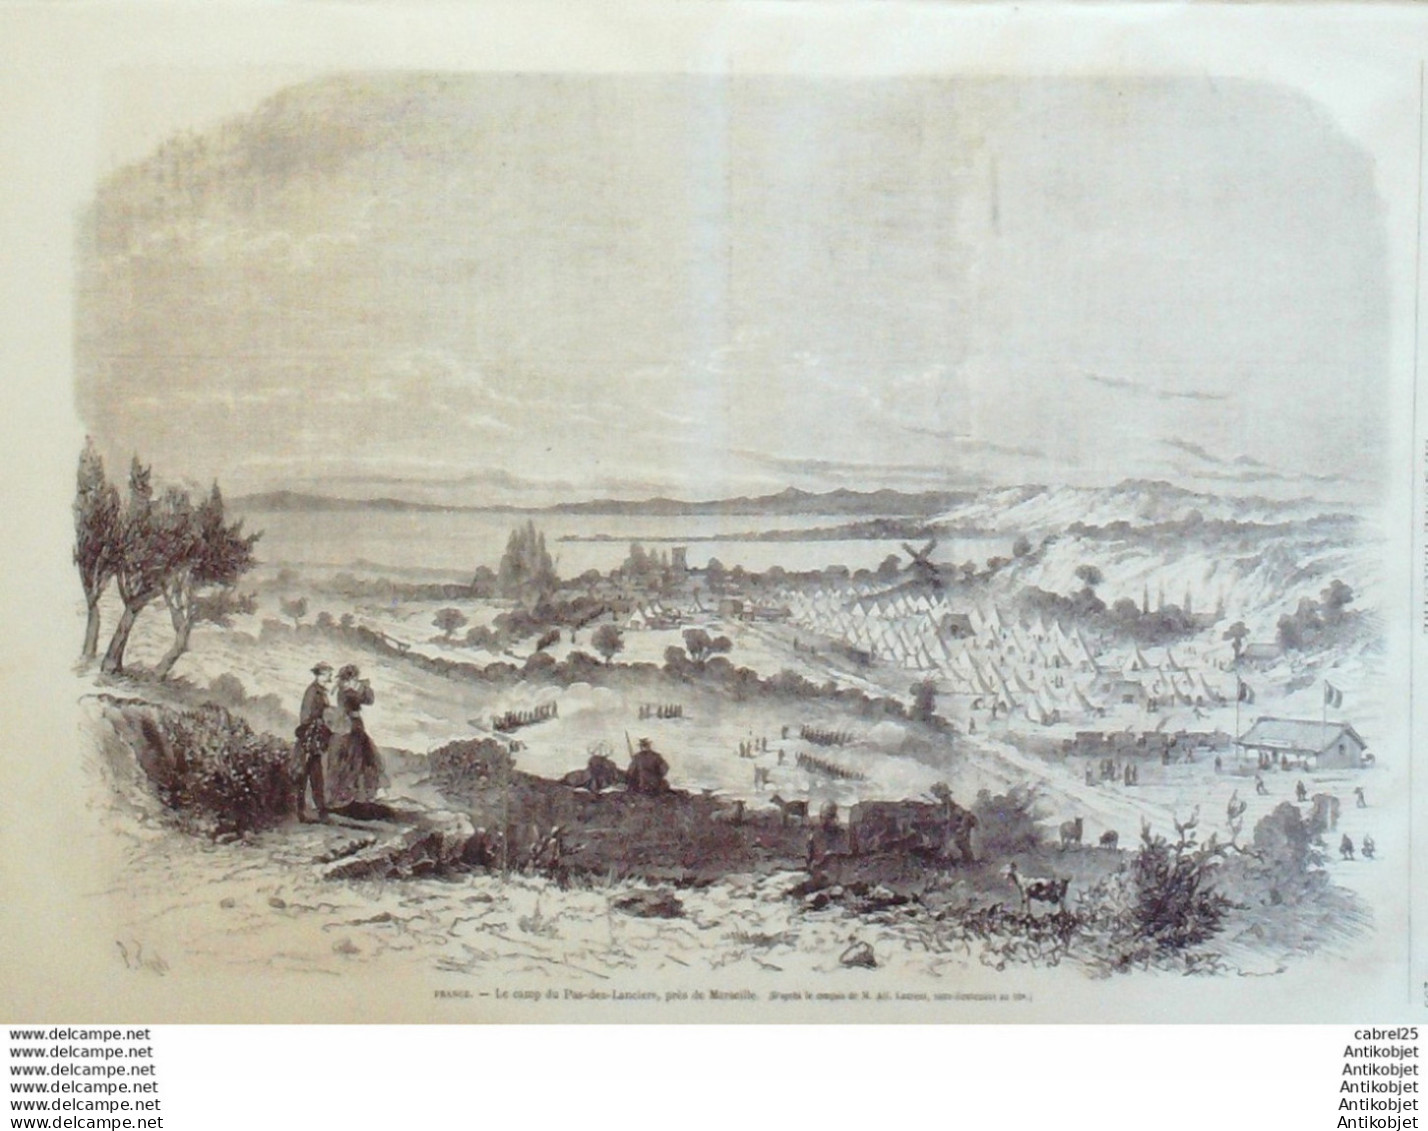 Le Monde Illustré 1869 N°630 Inde Seringam Italie Eza Marseille (13) Aix (13) Sedan Bocroi (08) Turenne - 1850 - 1899